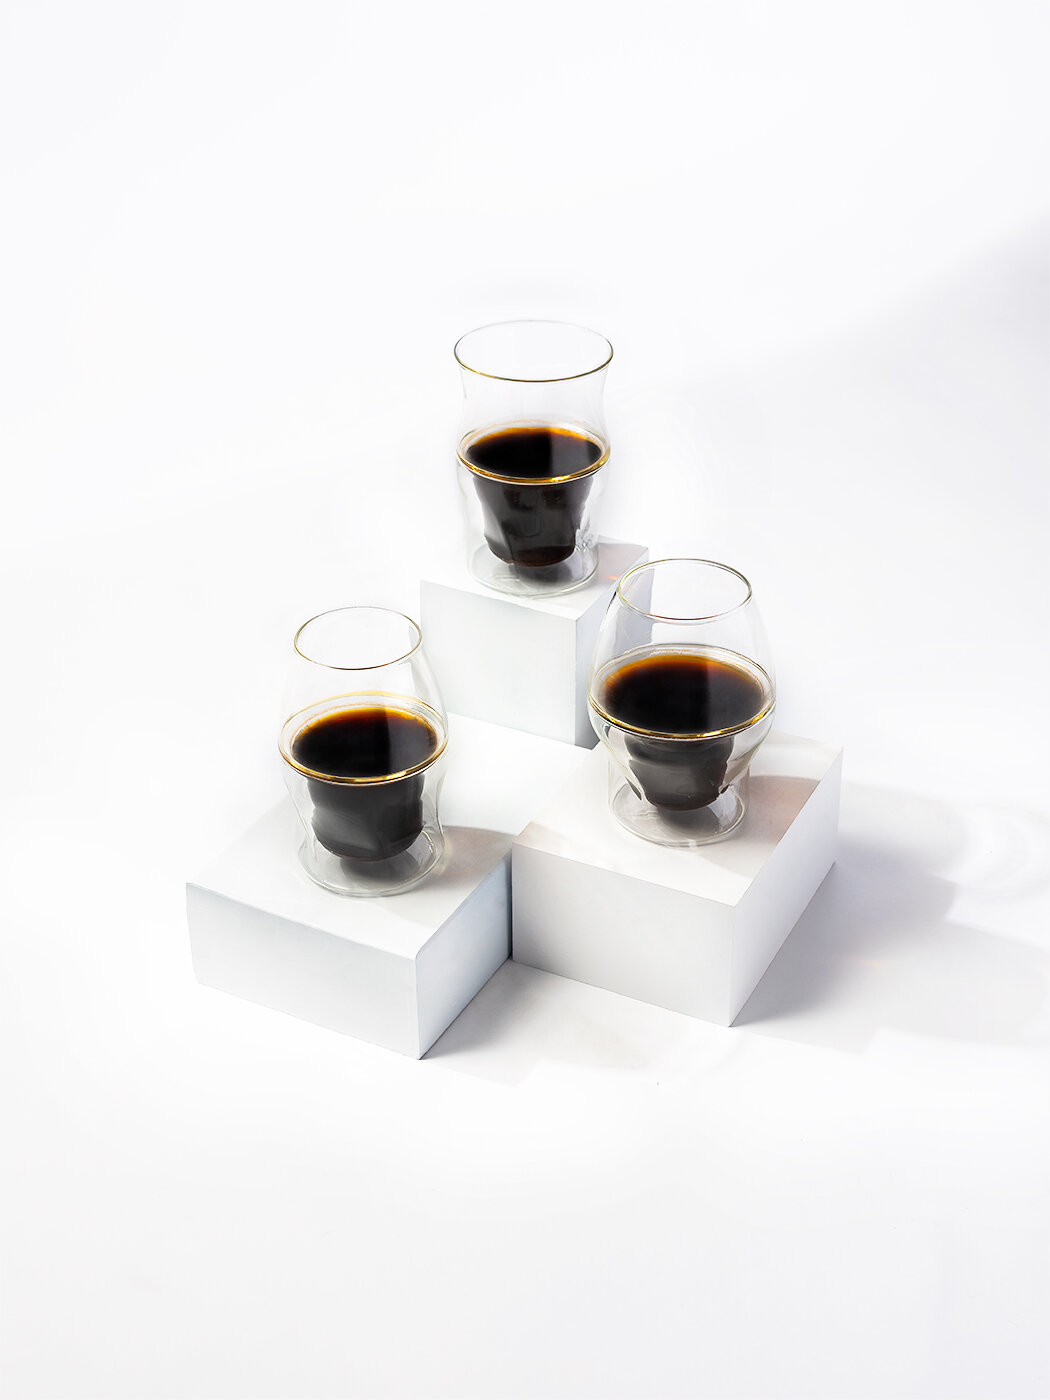 PRIMARY-Avensi Coffee Enhancing Glassware.jpg